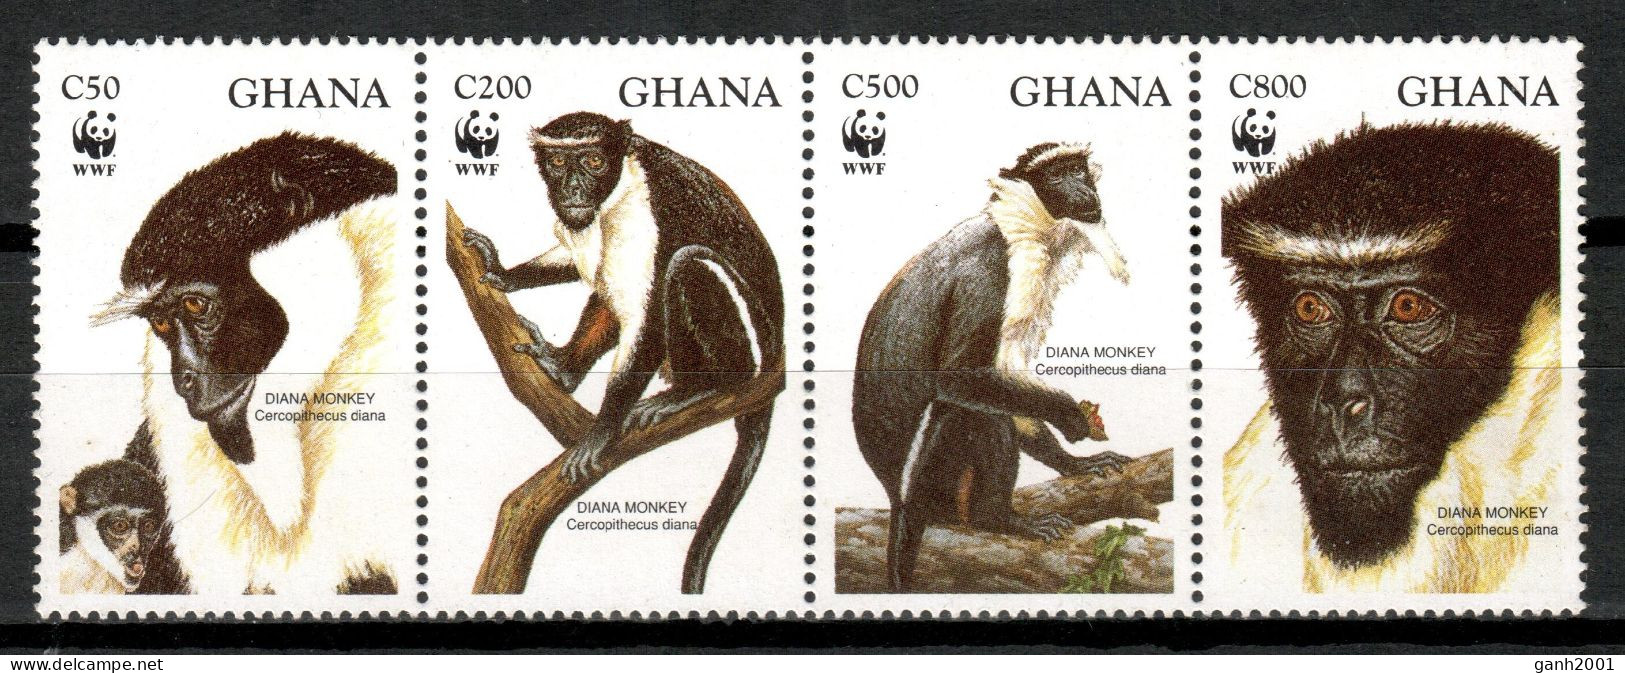 Ghana 1994 / Fauna Mammals Monkeys WWF MNH Mamíferos Monos Säugetiere / Cu19920  5-1 - Singes